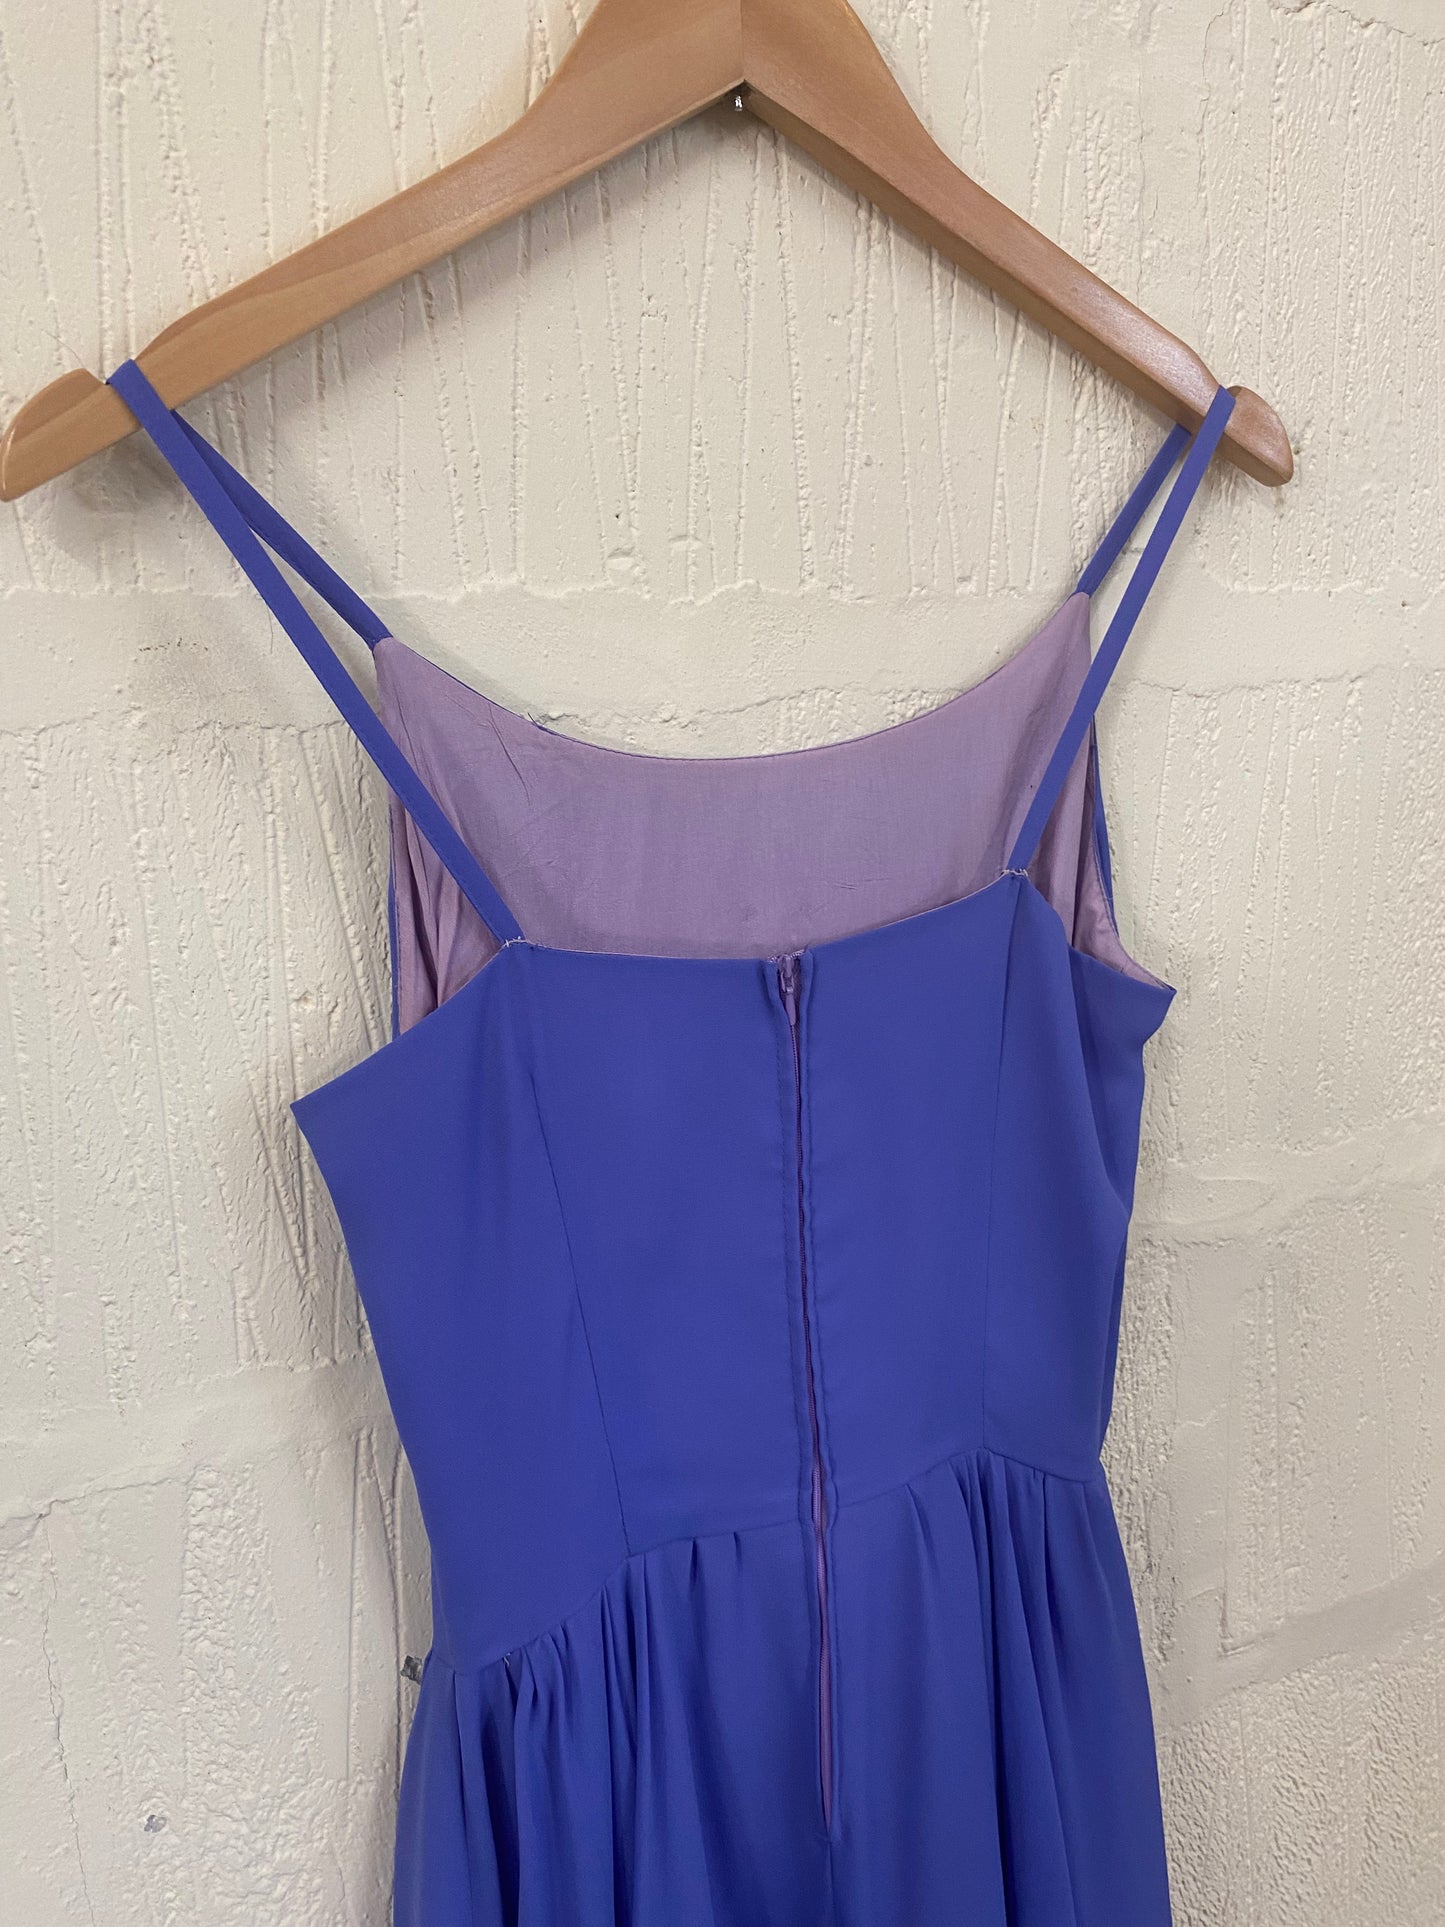 Vintage Purple Ballerina Style Dress Size 6